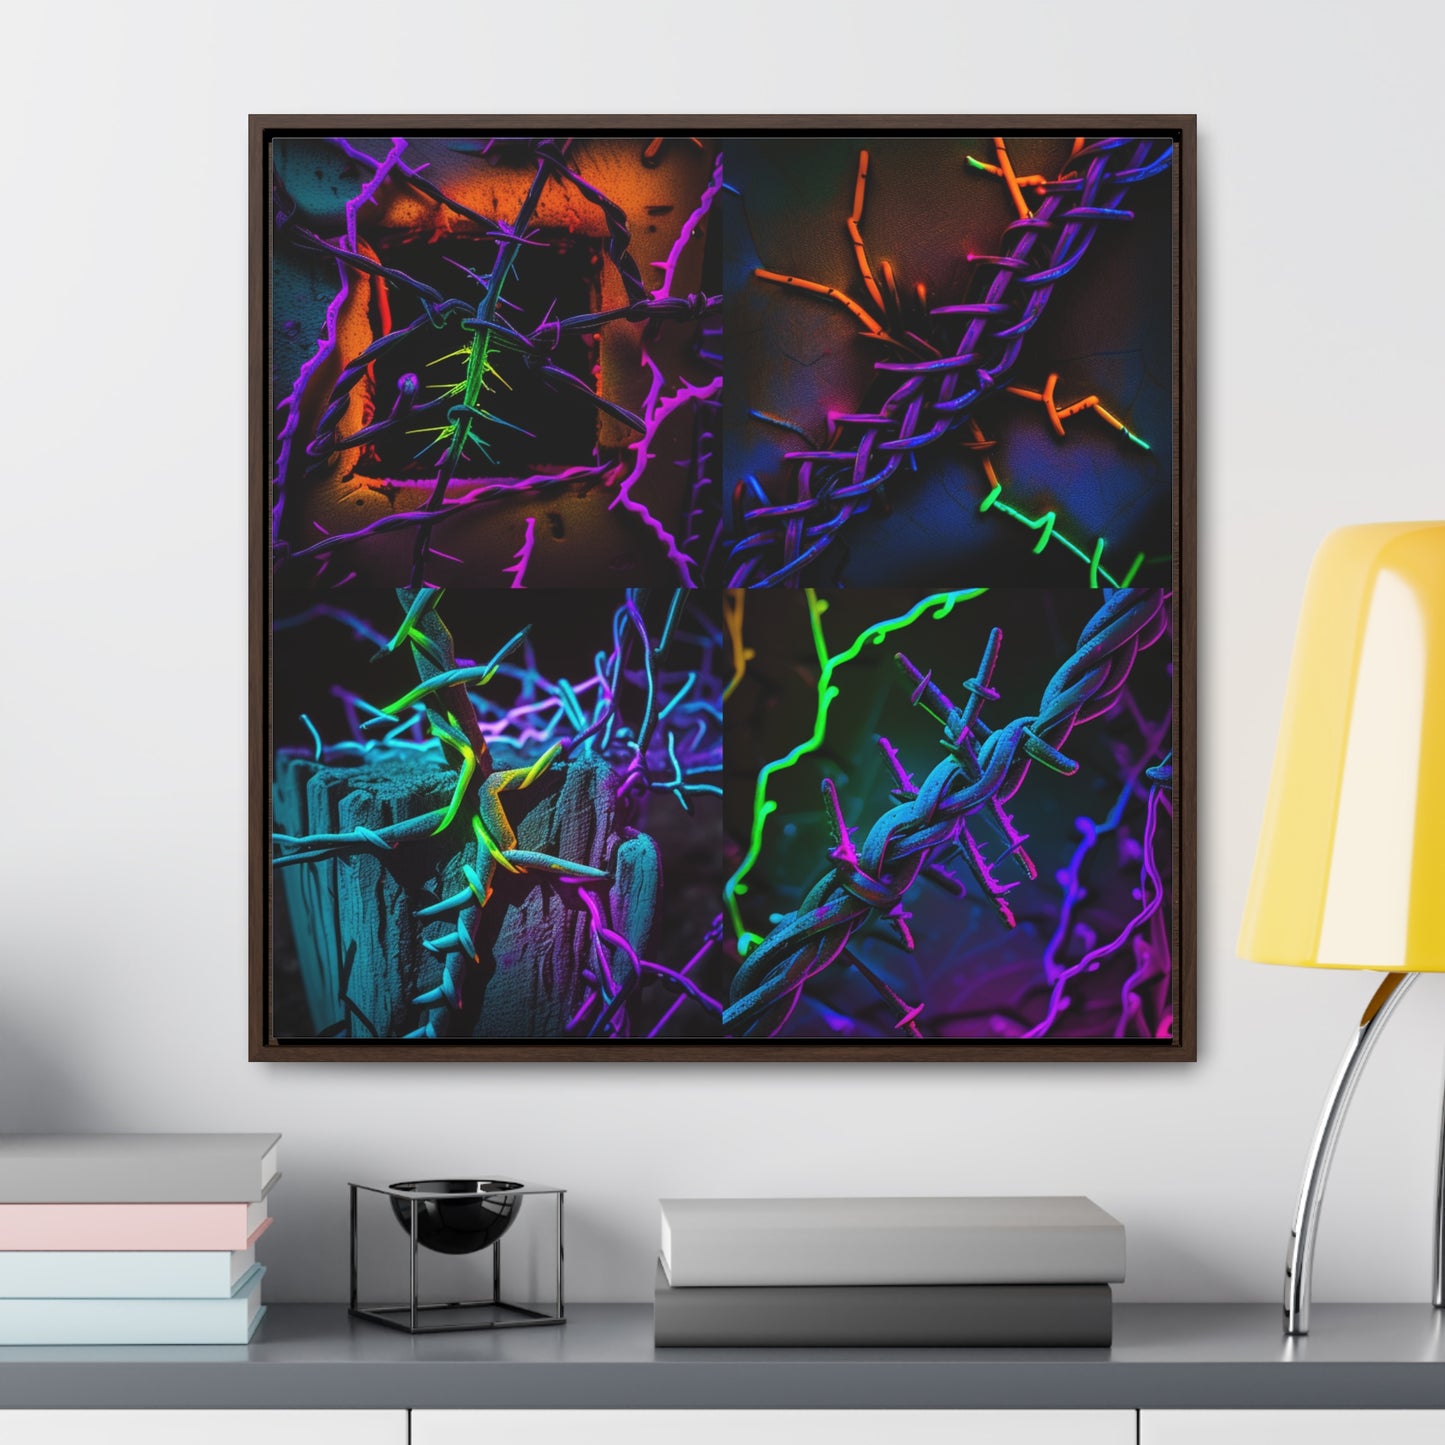 Gallery Canvas Wraps, Square Frame Macro Neon Barbs 5